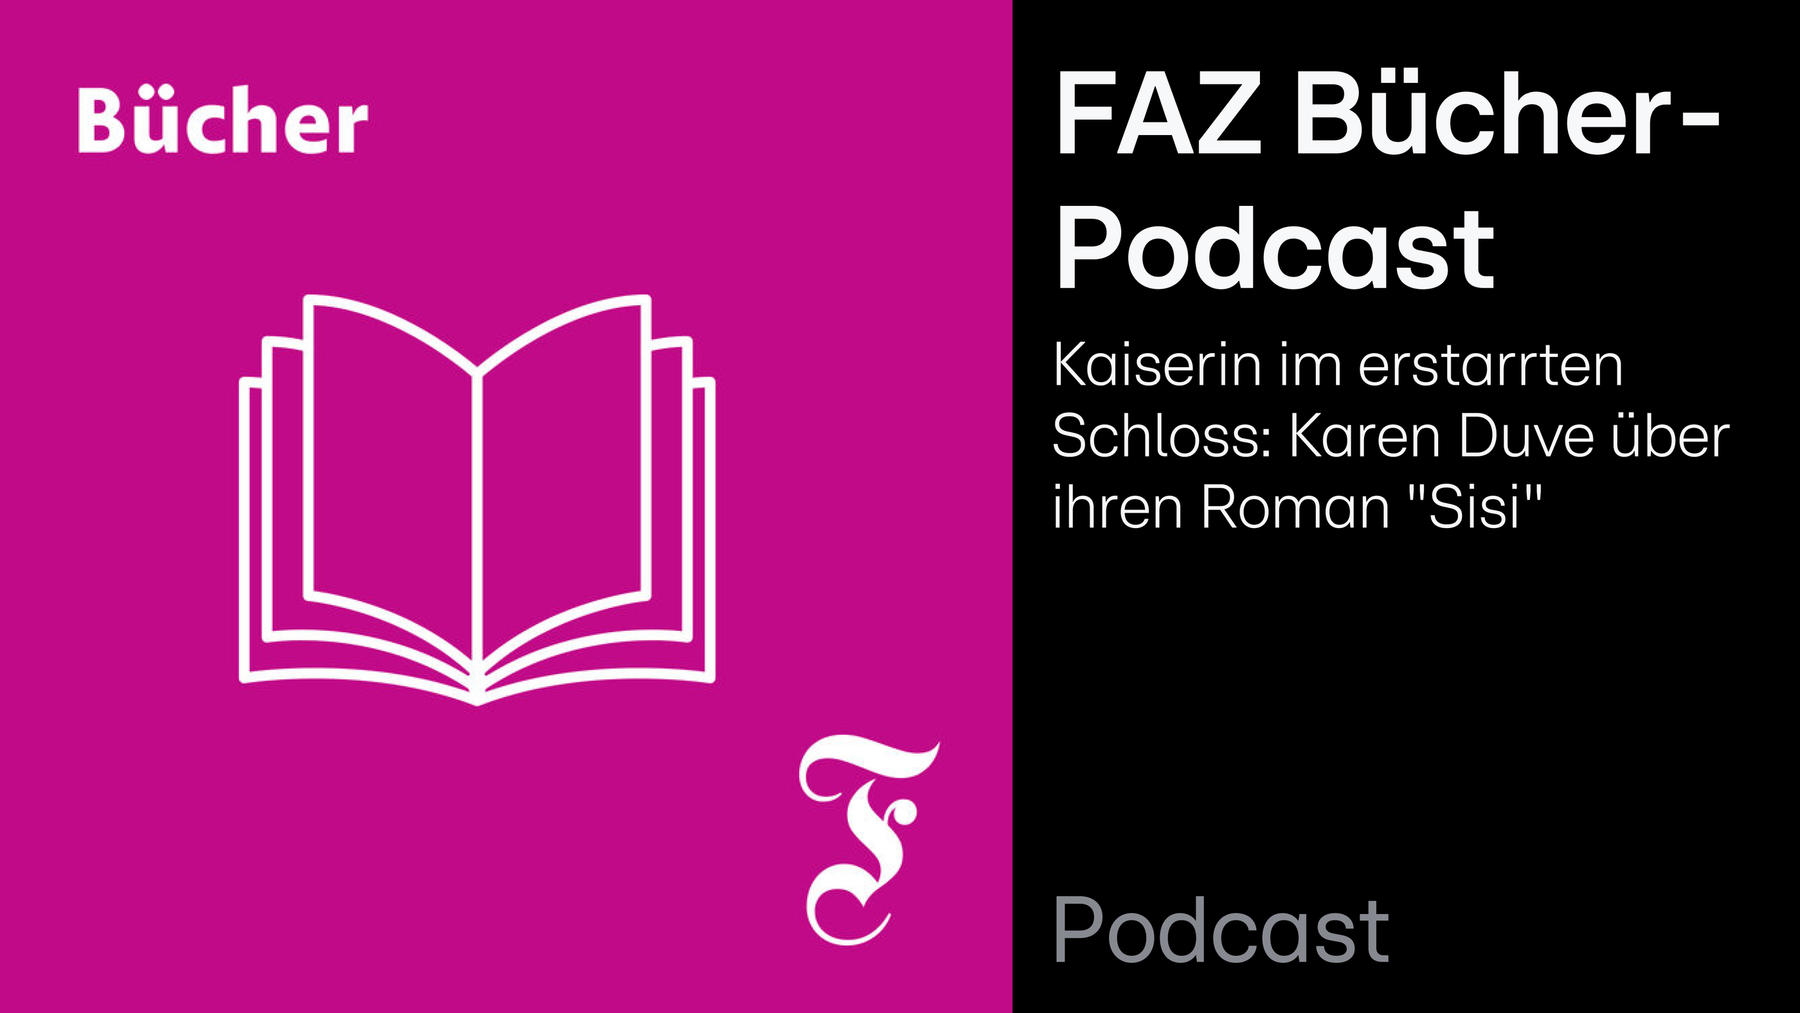 Podcast: Kaiserin im erstarrten Schloss: Karen Duve über ihren Roman "Sisi"